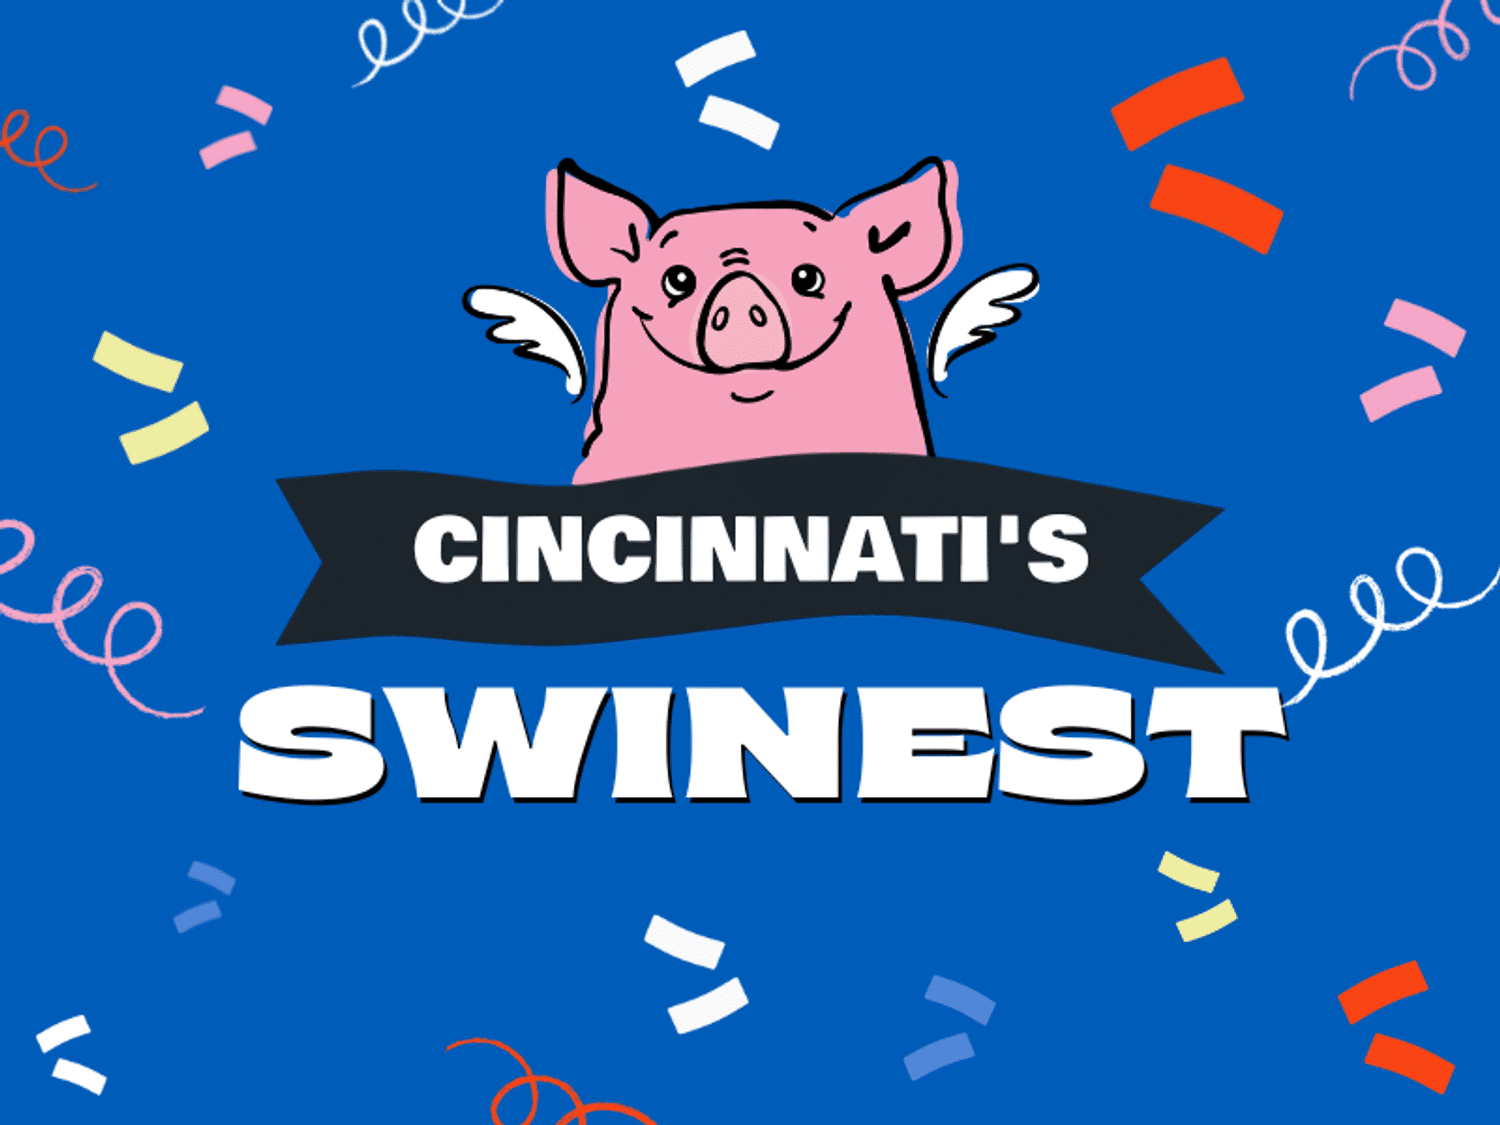 Pizza, Coneys, Ice Cream and More: Recognizing Some of “Cincinnati’s Swinest”